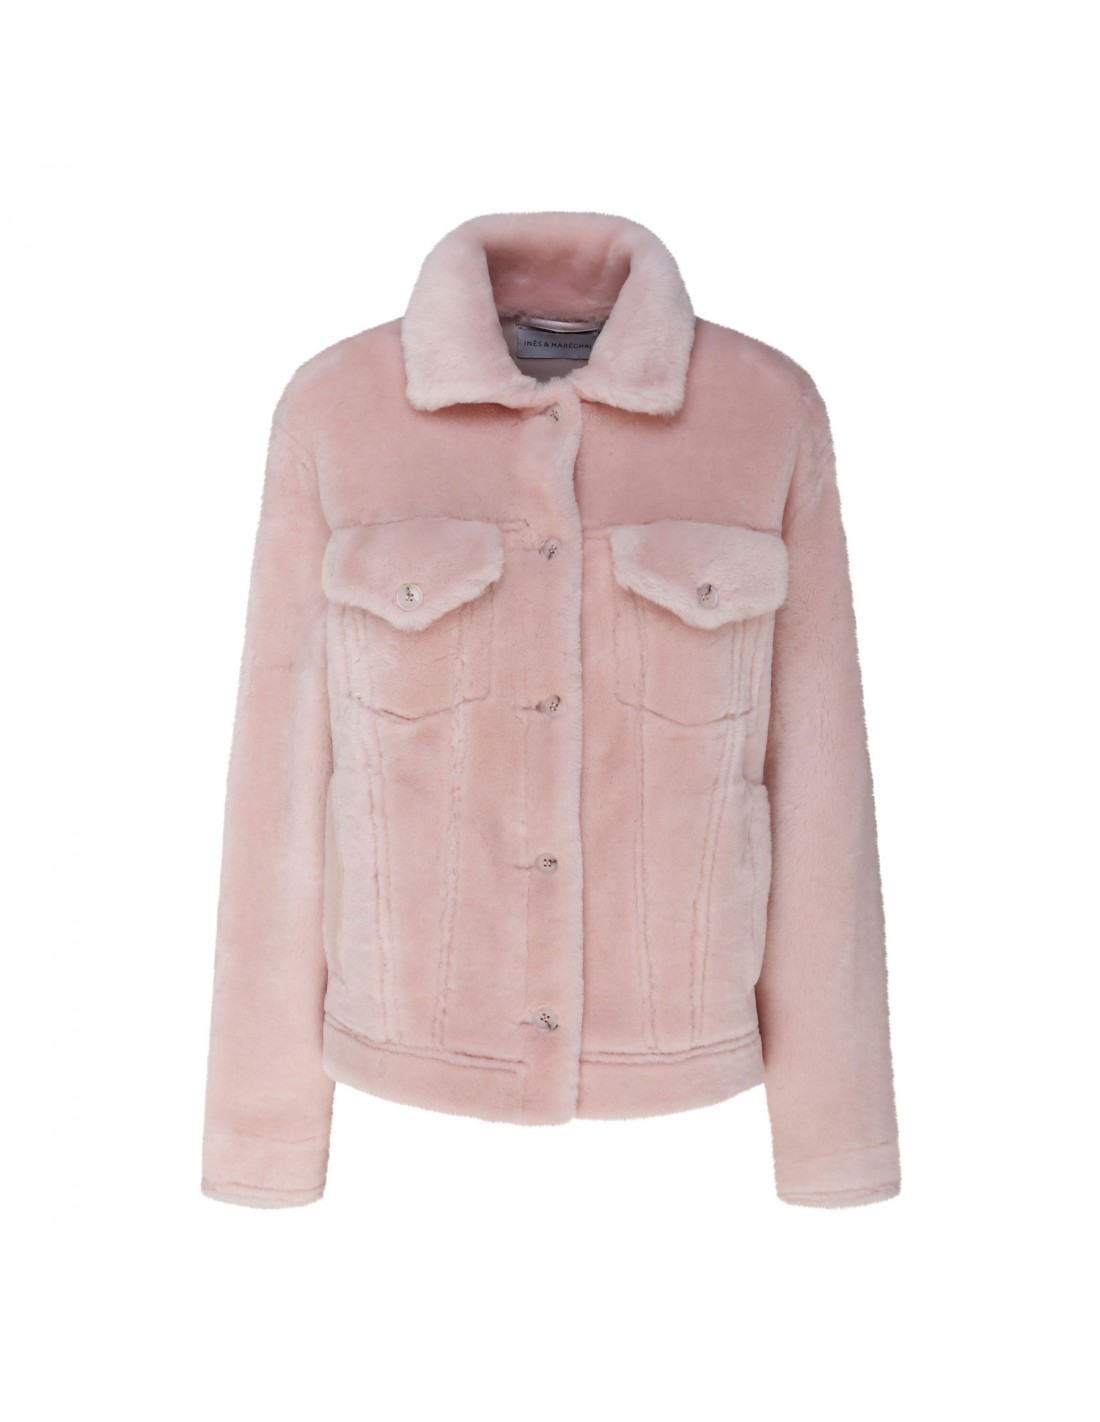 Nuances pink jacket